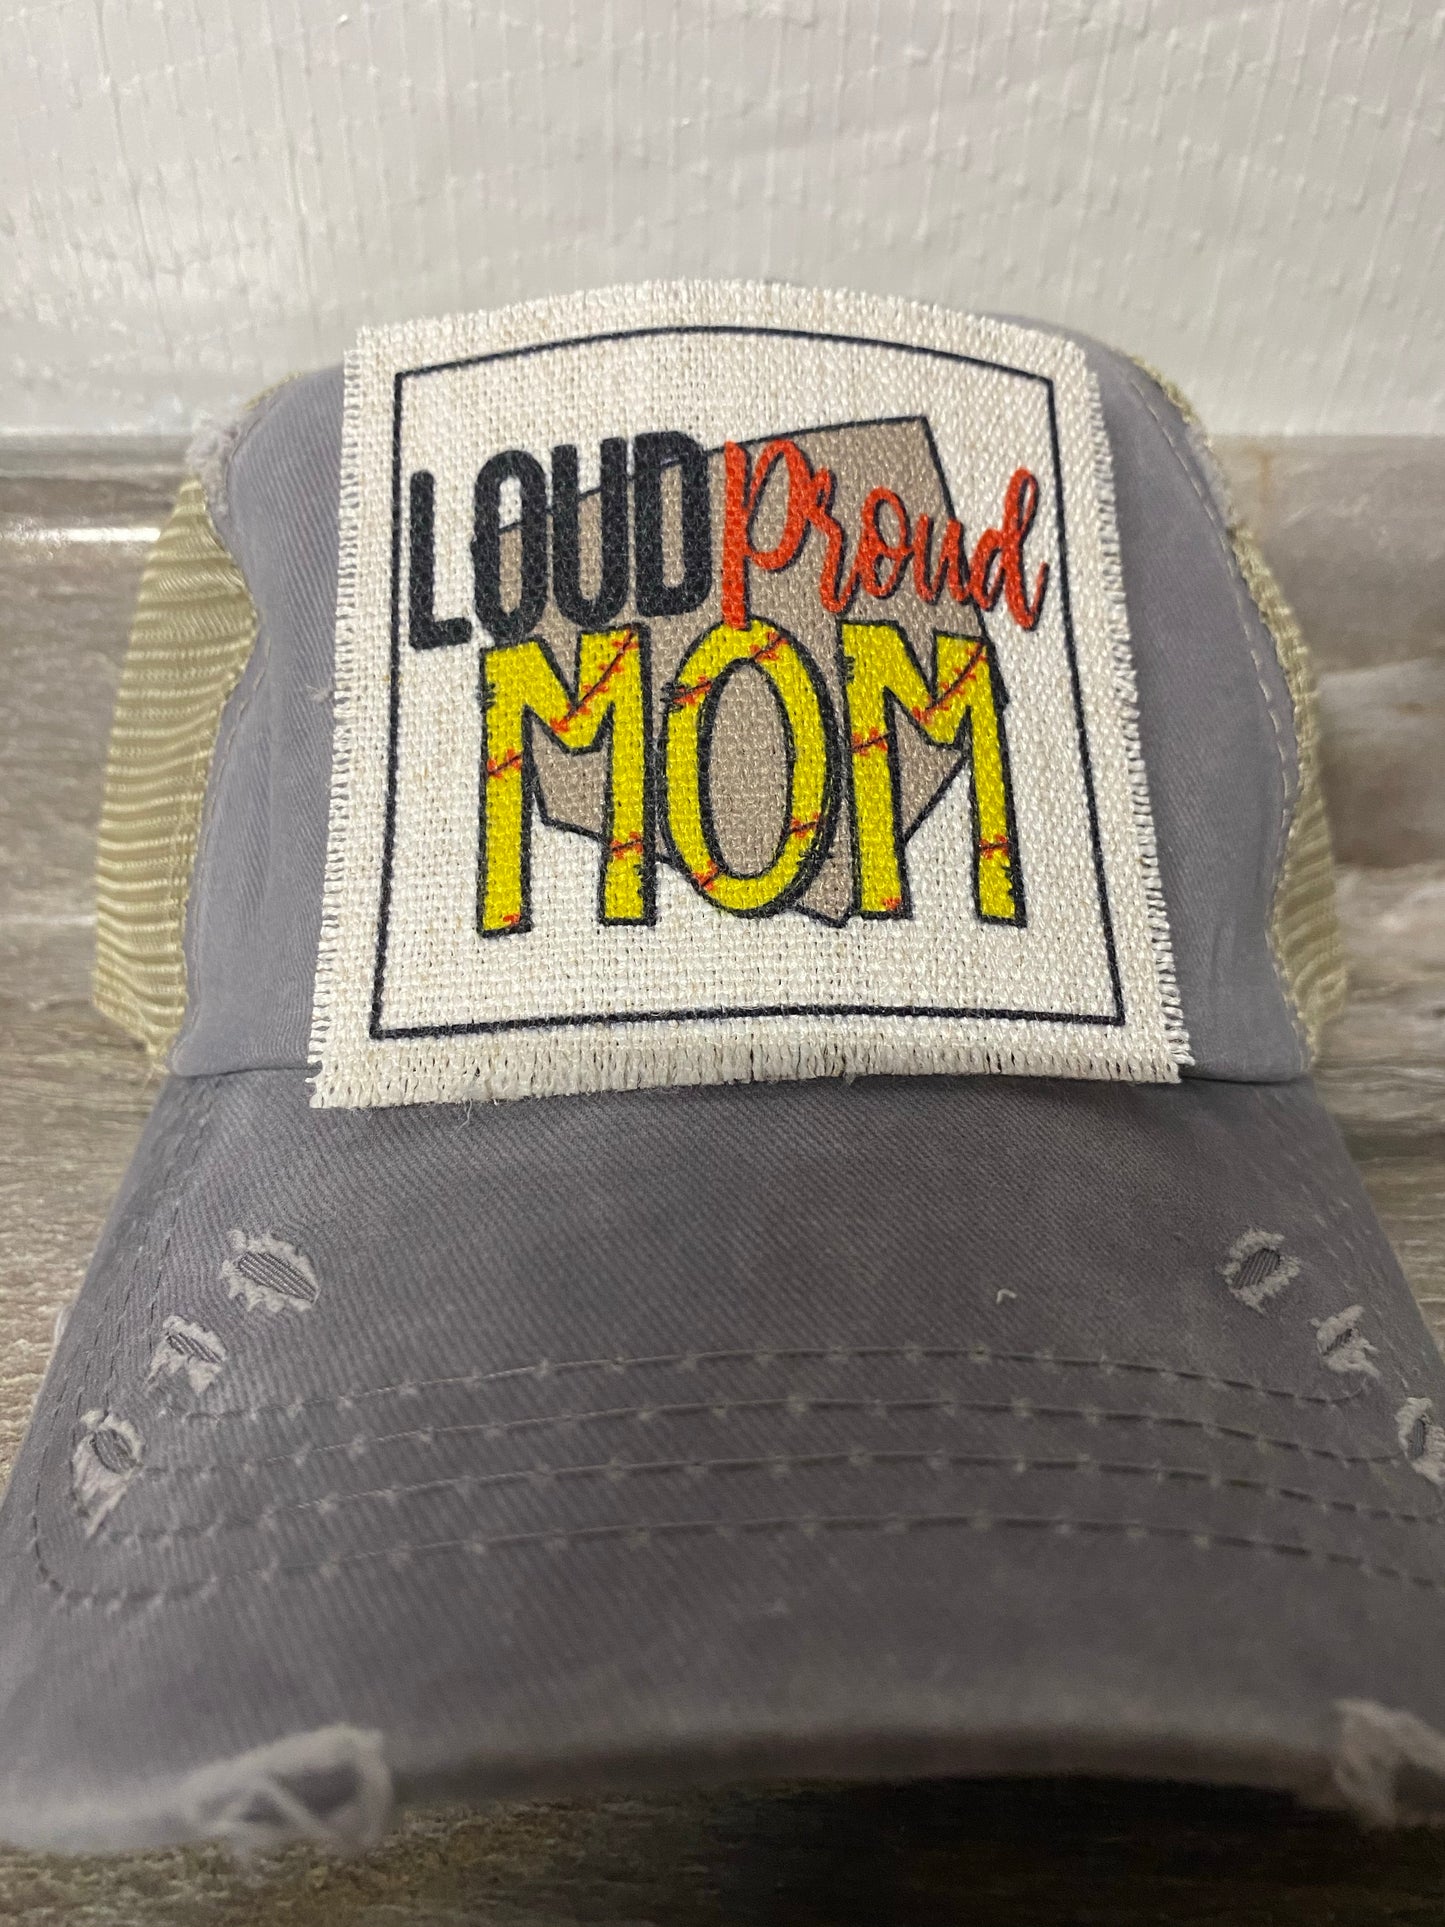 Loud Proud Mom Softball Hat Patch